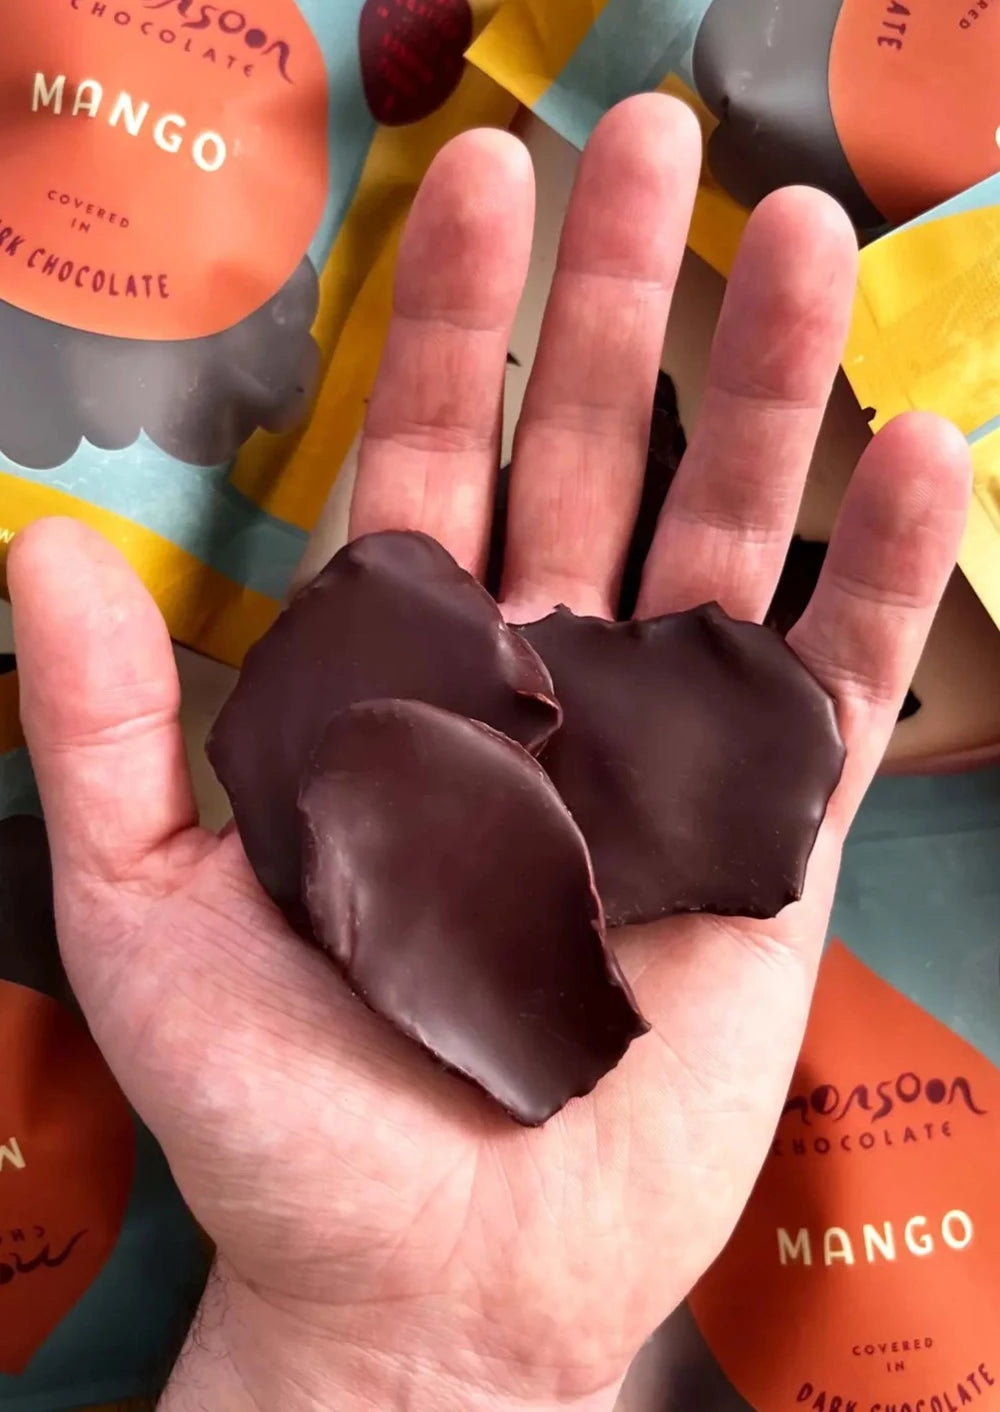 Mangos Covered in Dark Chocolate